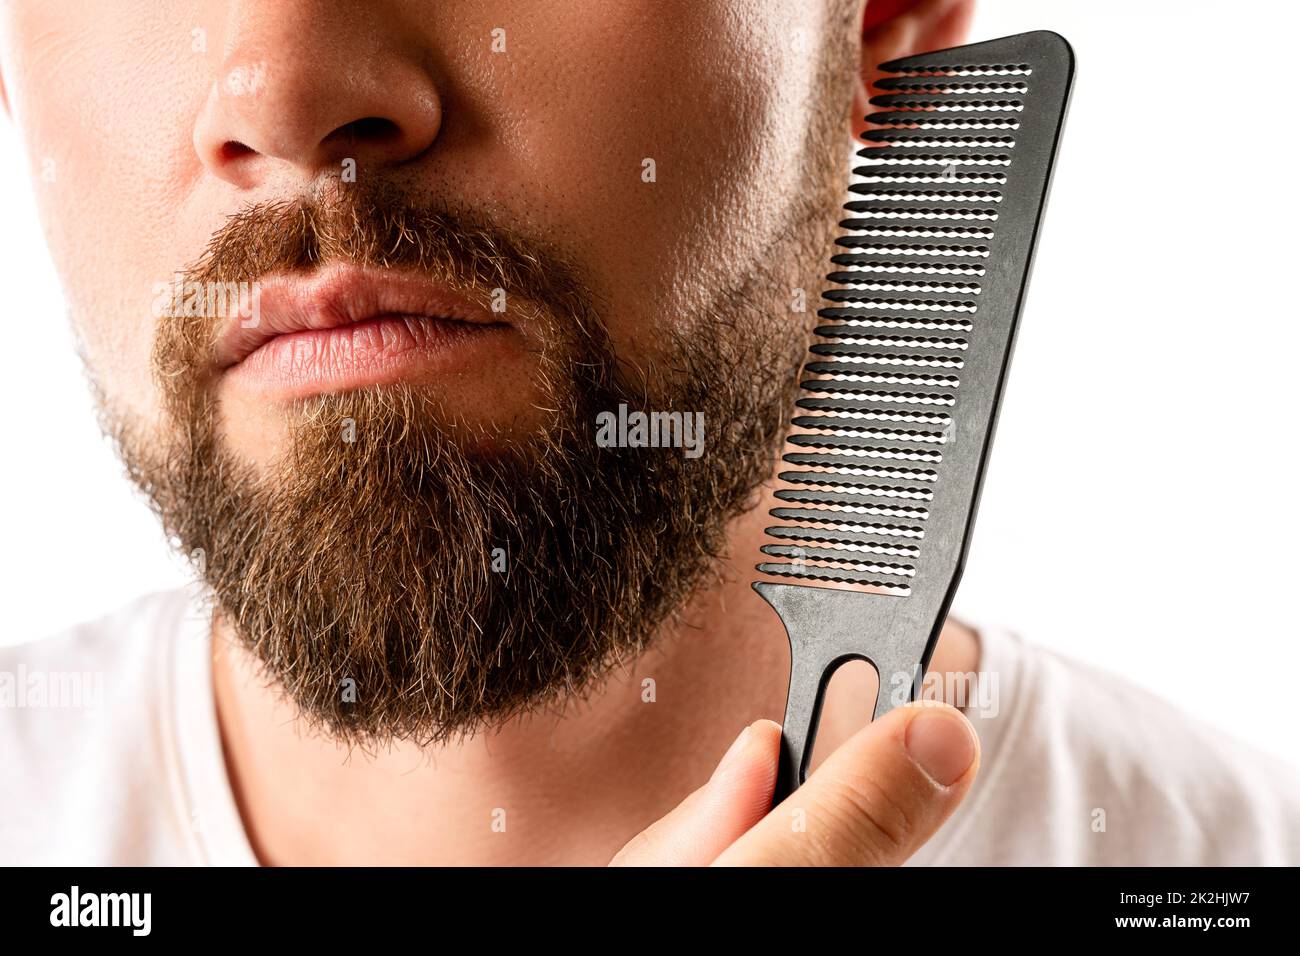 Well groomed man combing his beard Stock Photo